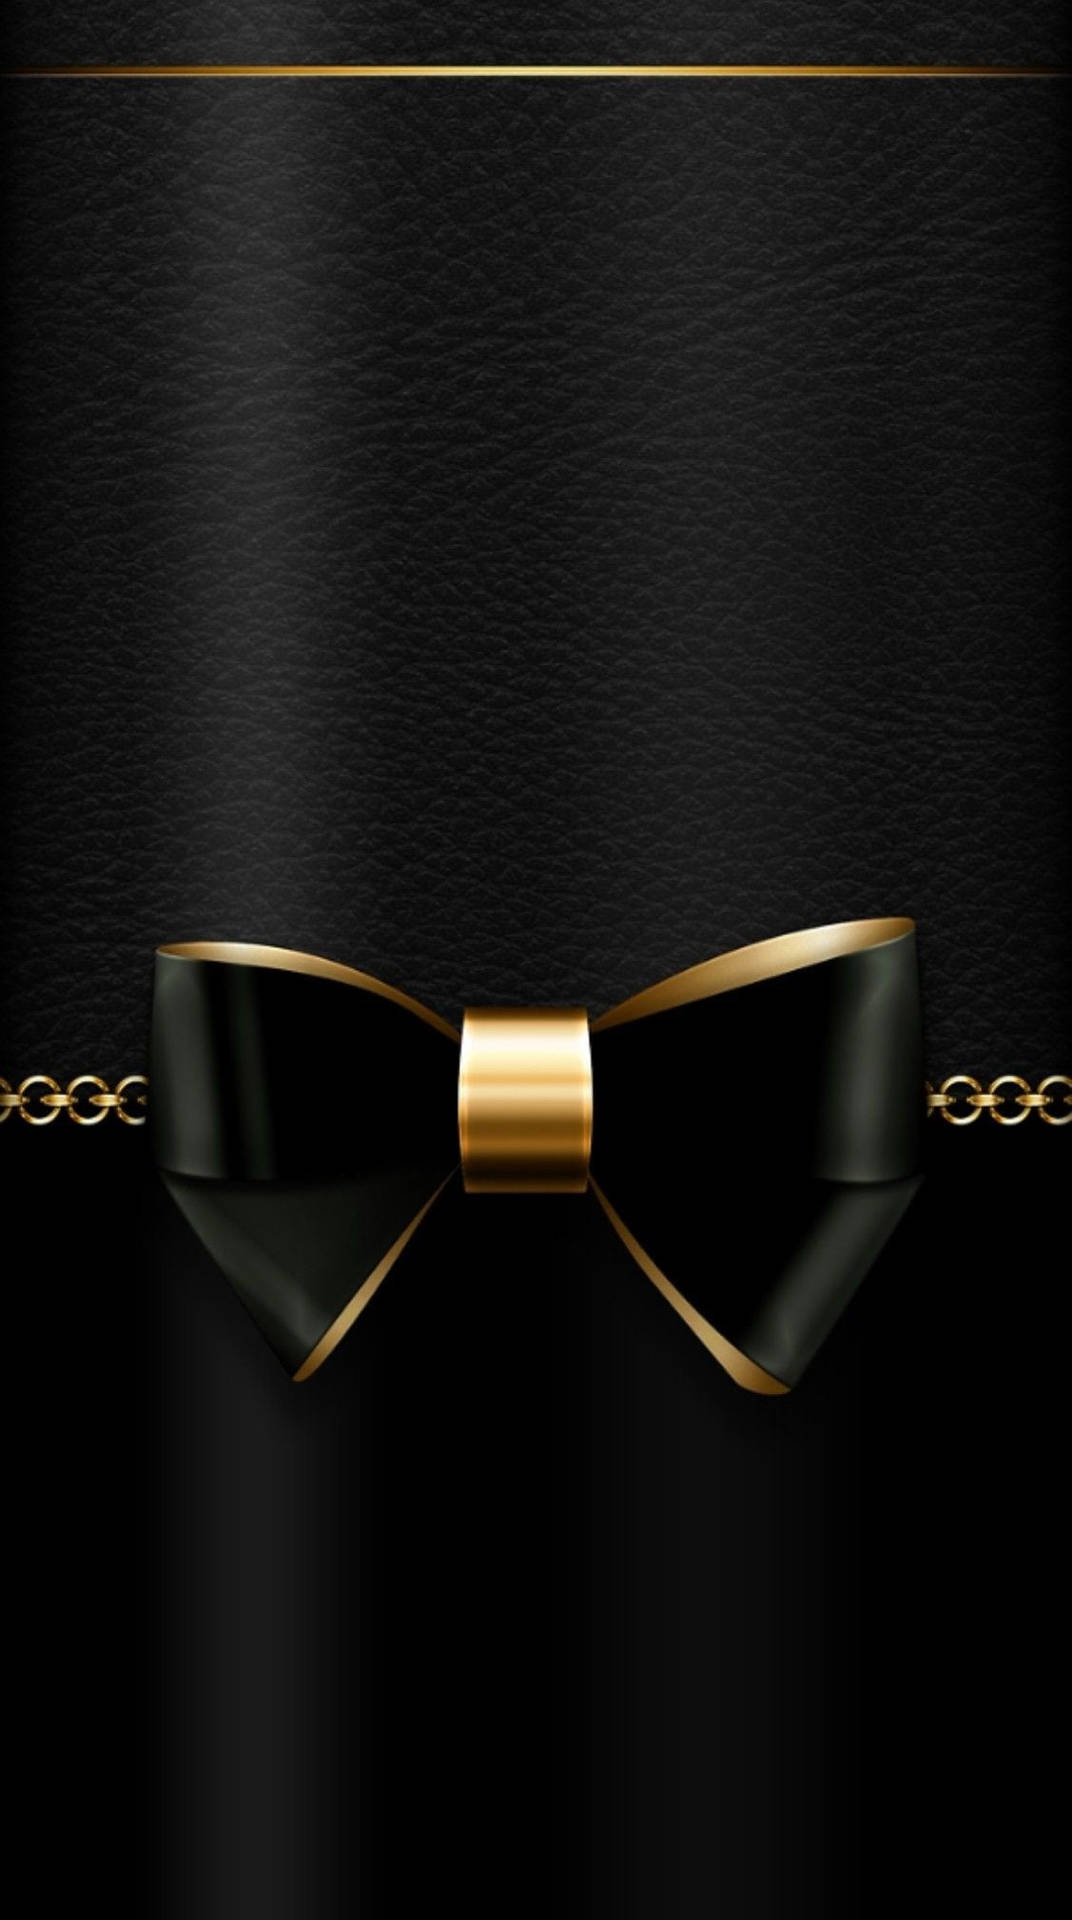 Ribbon Black And Gold iPhone Wallpaper